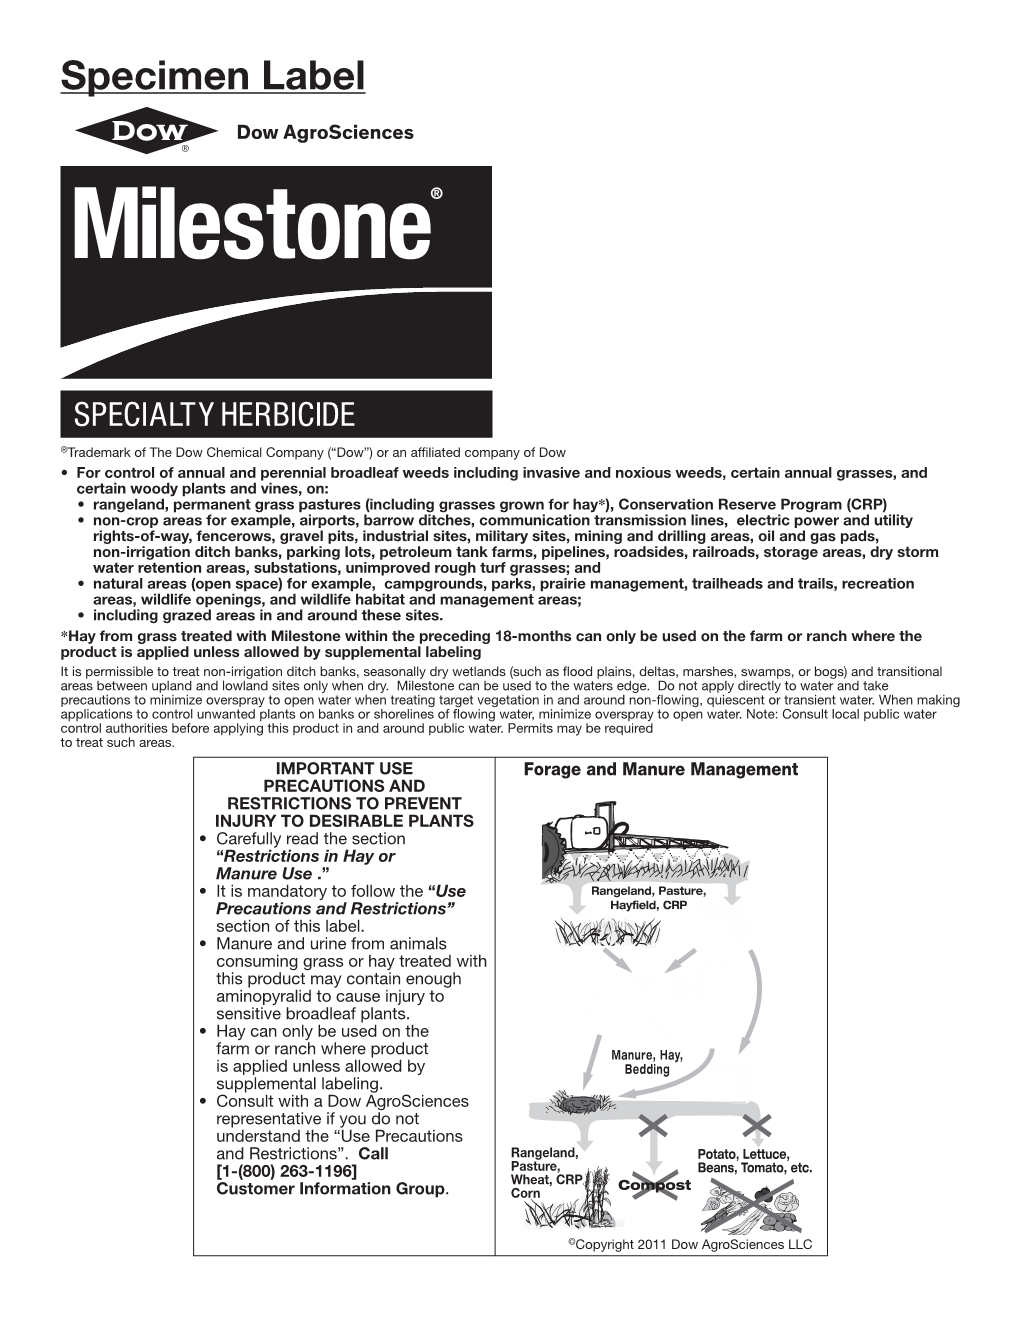 Milestone Herbicide Label